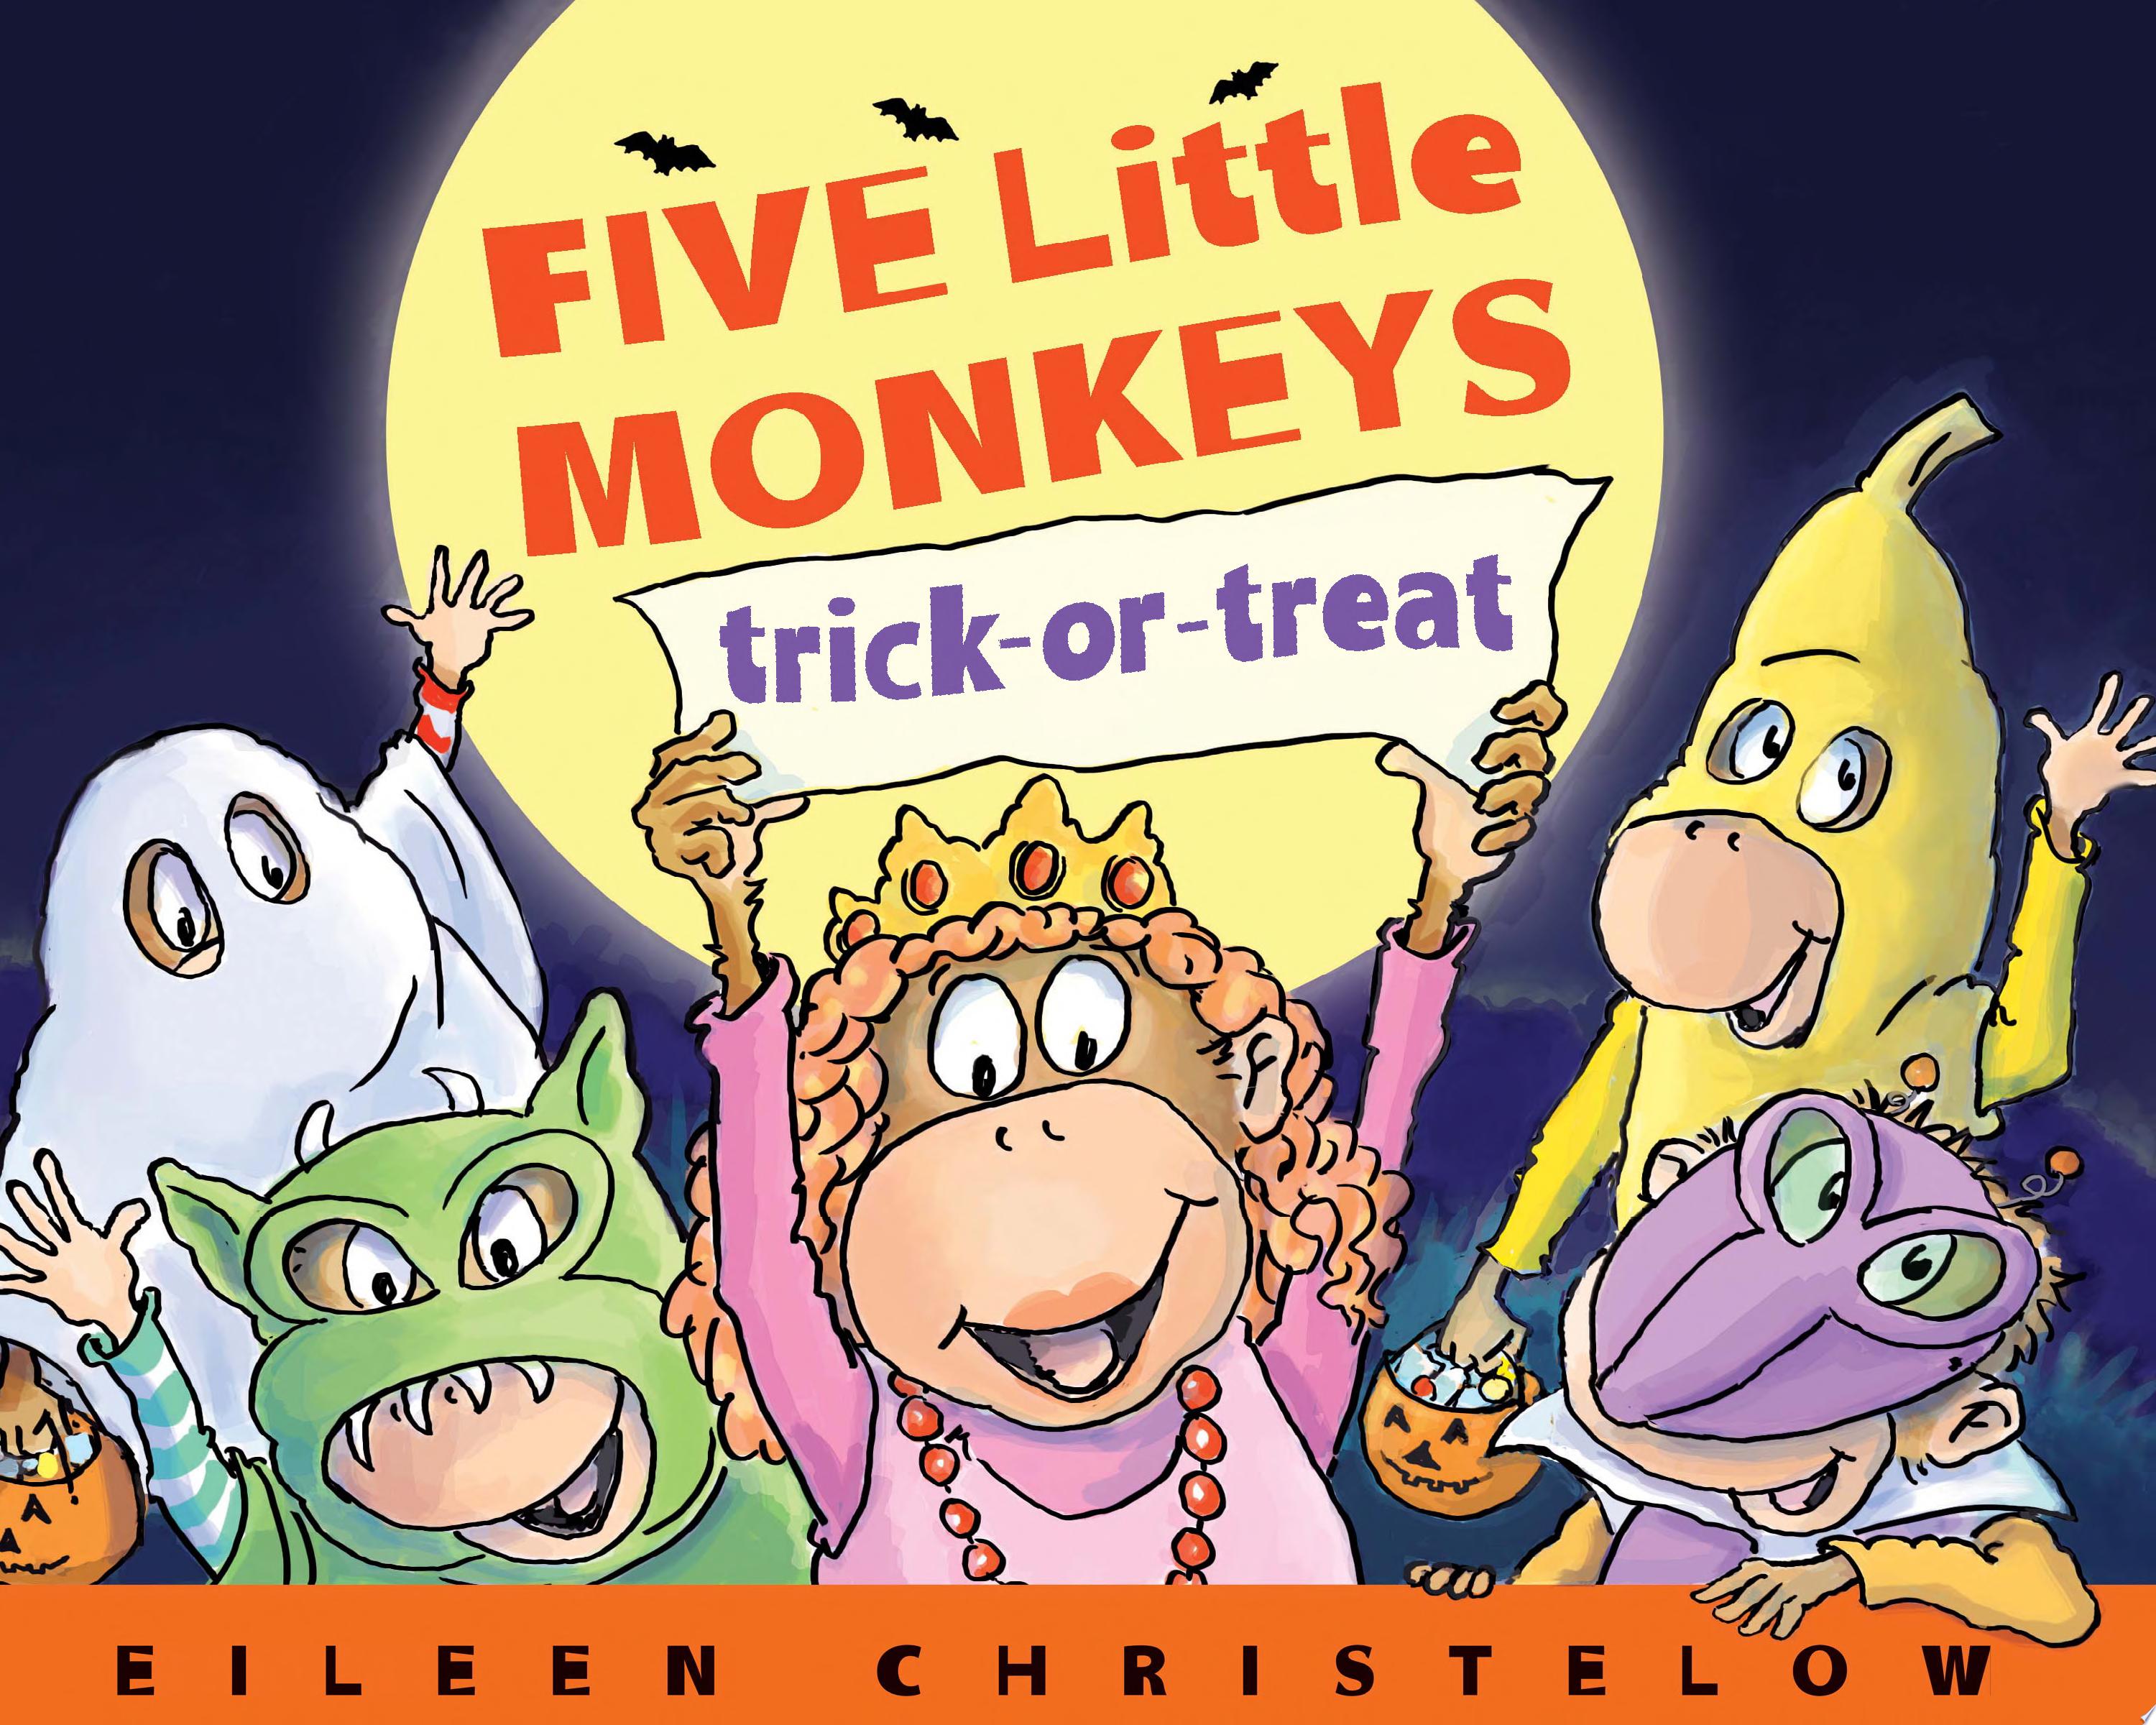 Image for "Five Little Monkeys Trick-Or-Treat"